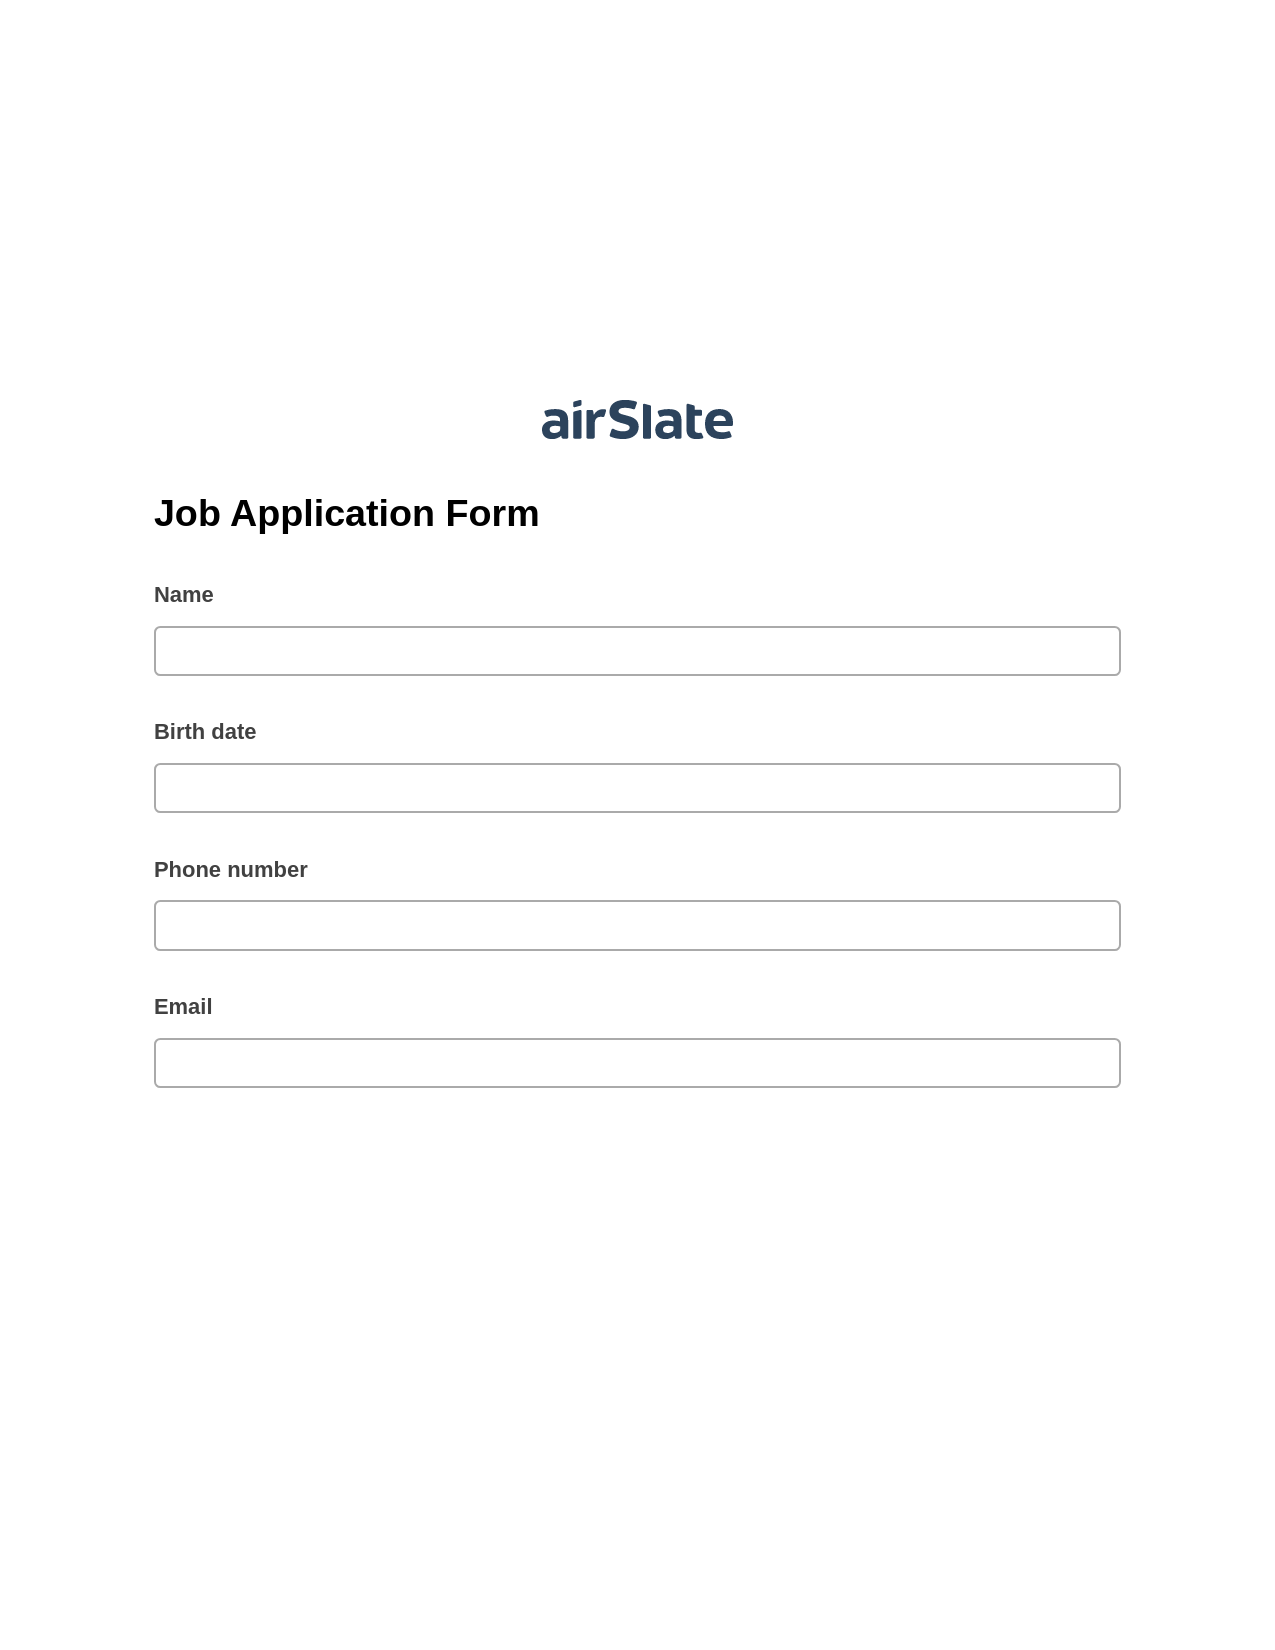 Multirole Job Application Form Pre-fill from CSV File Dropdown Options Bot, Update Salesforce Record Bot, Box Bot